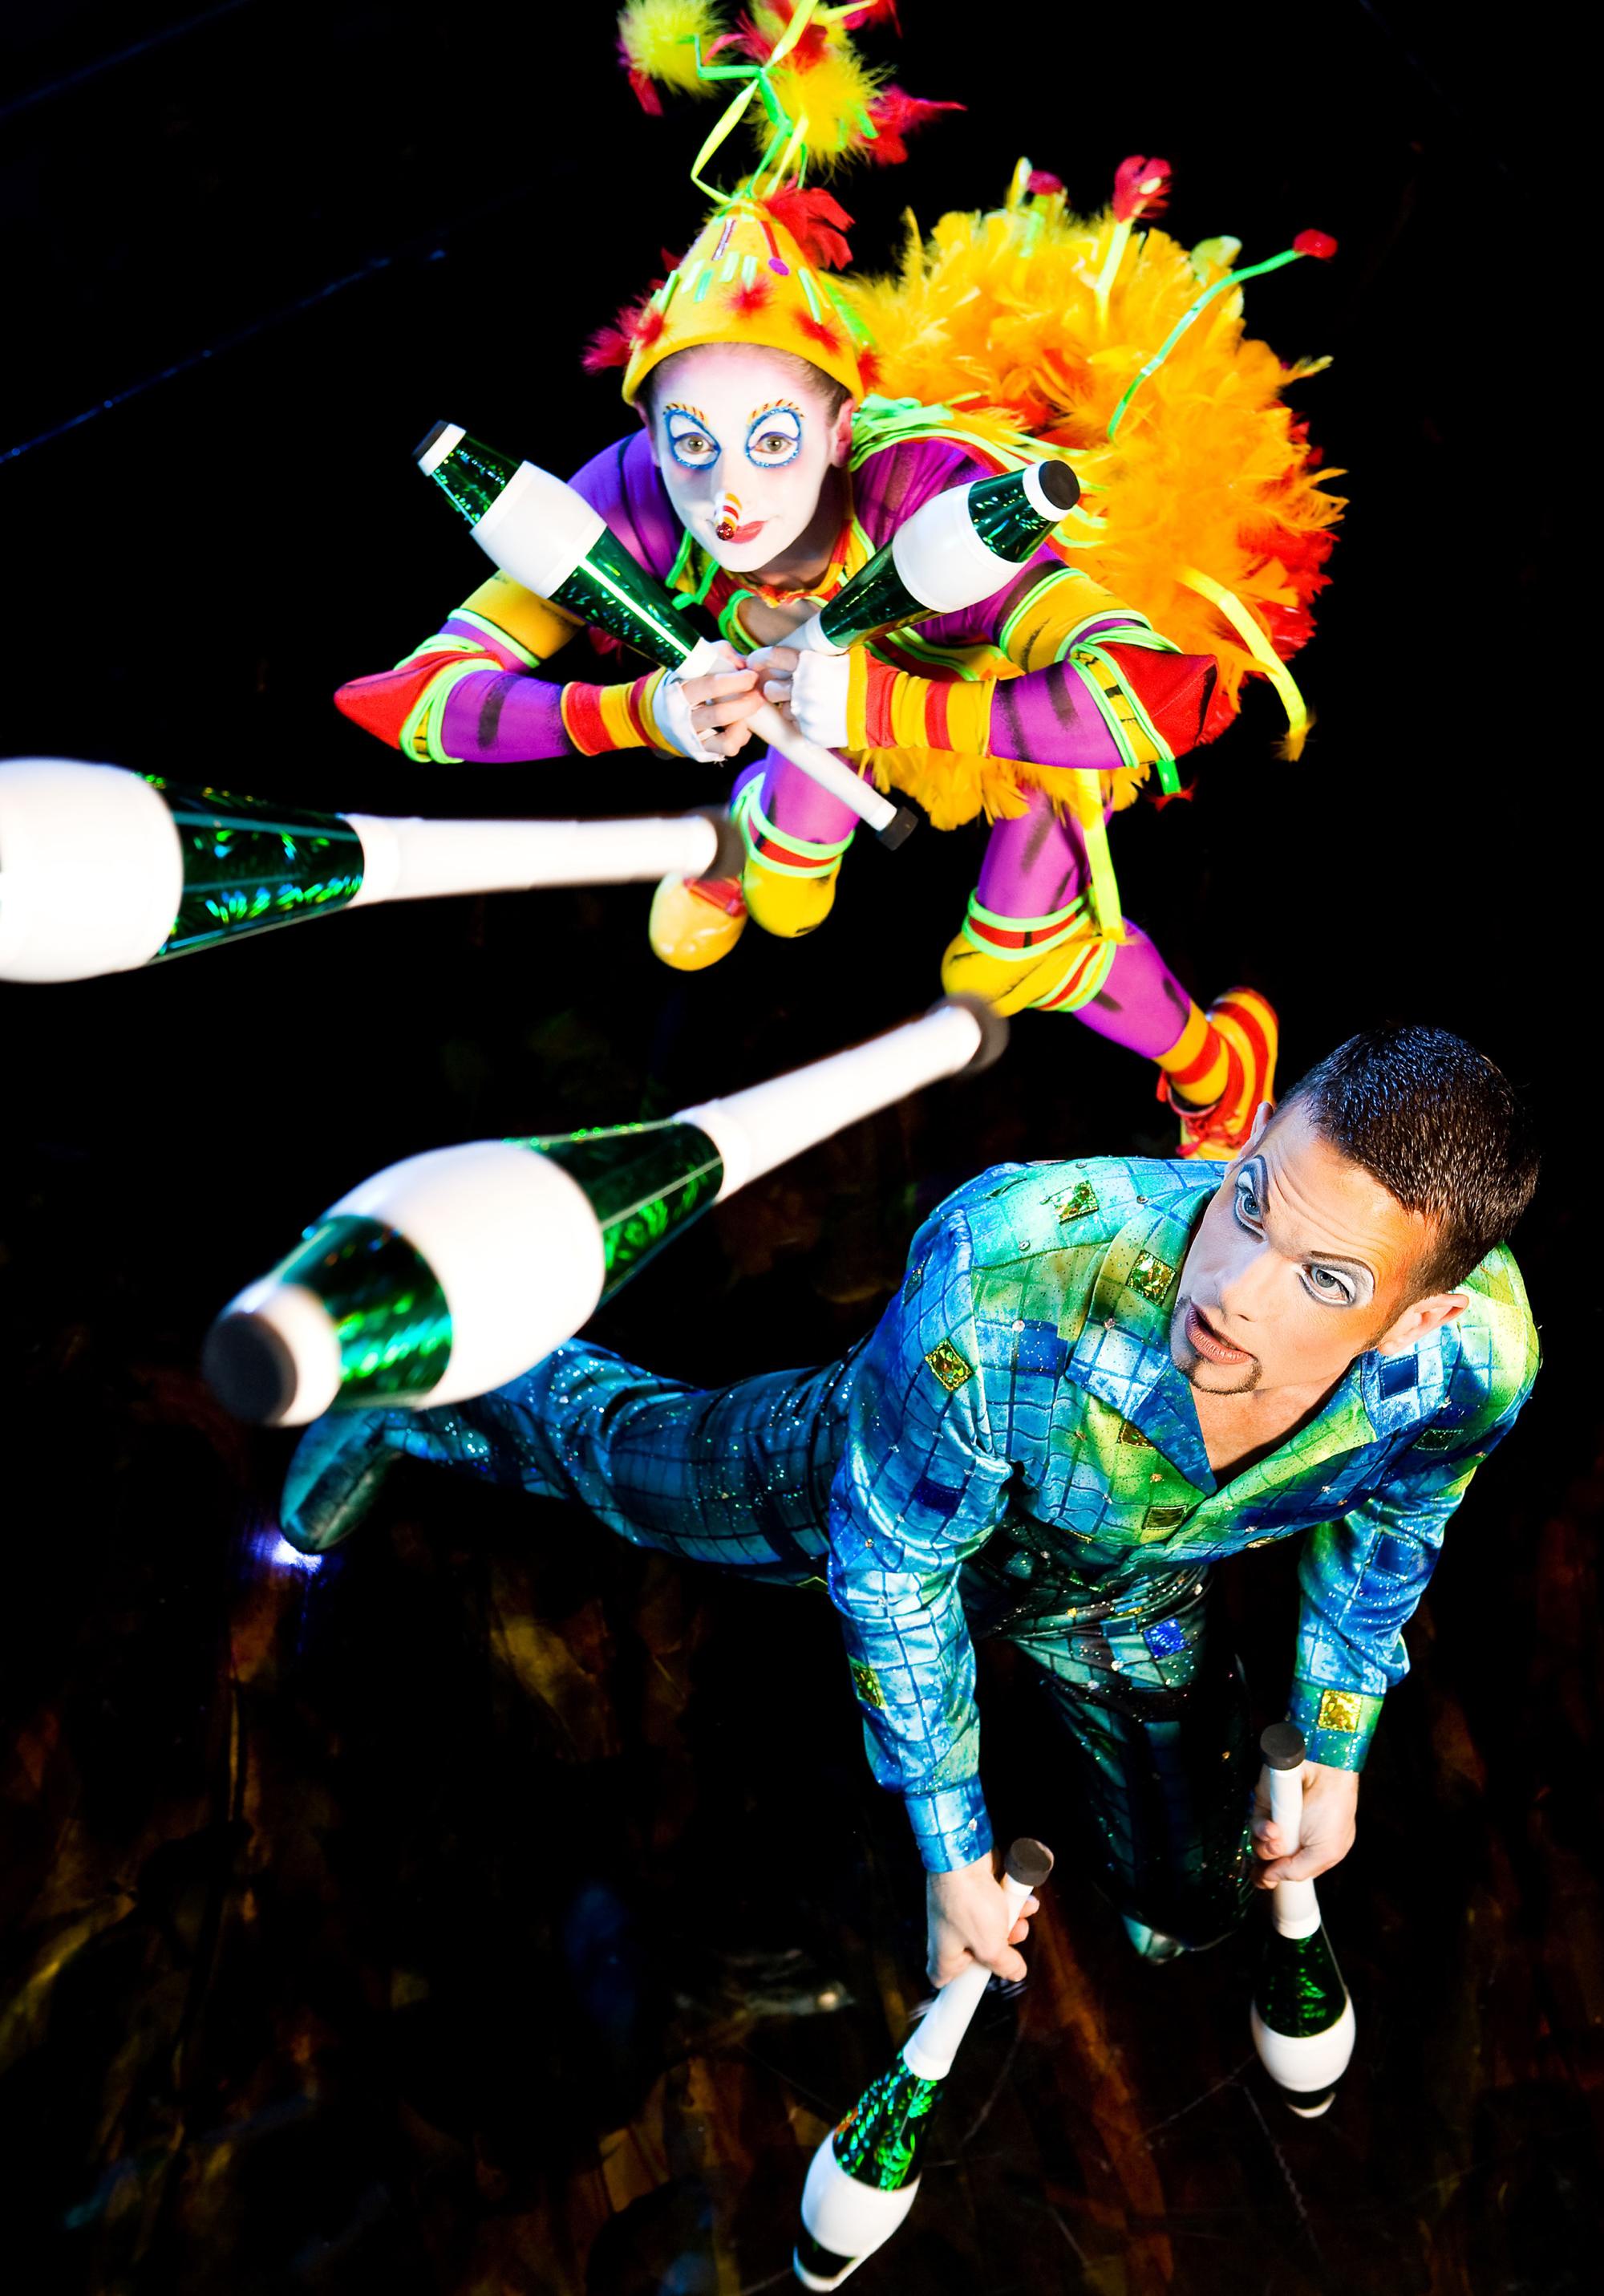 Tables in Wonderland Members Flip For This Cirque du Soleil Offer